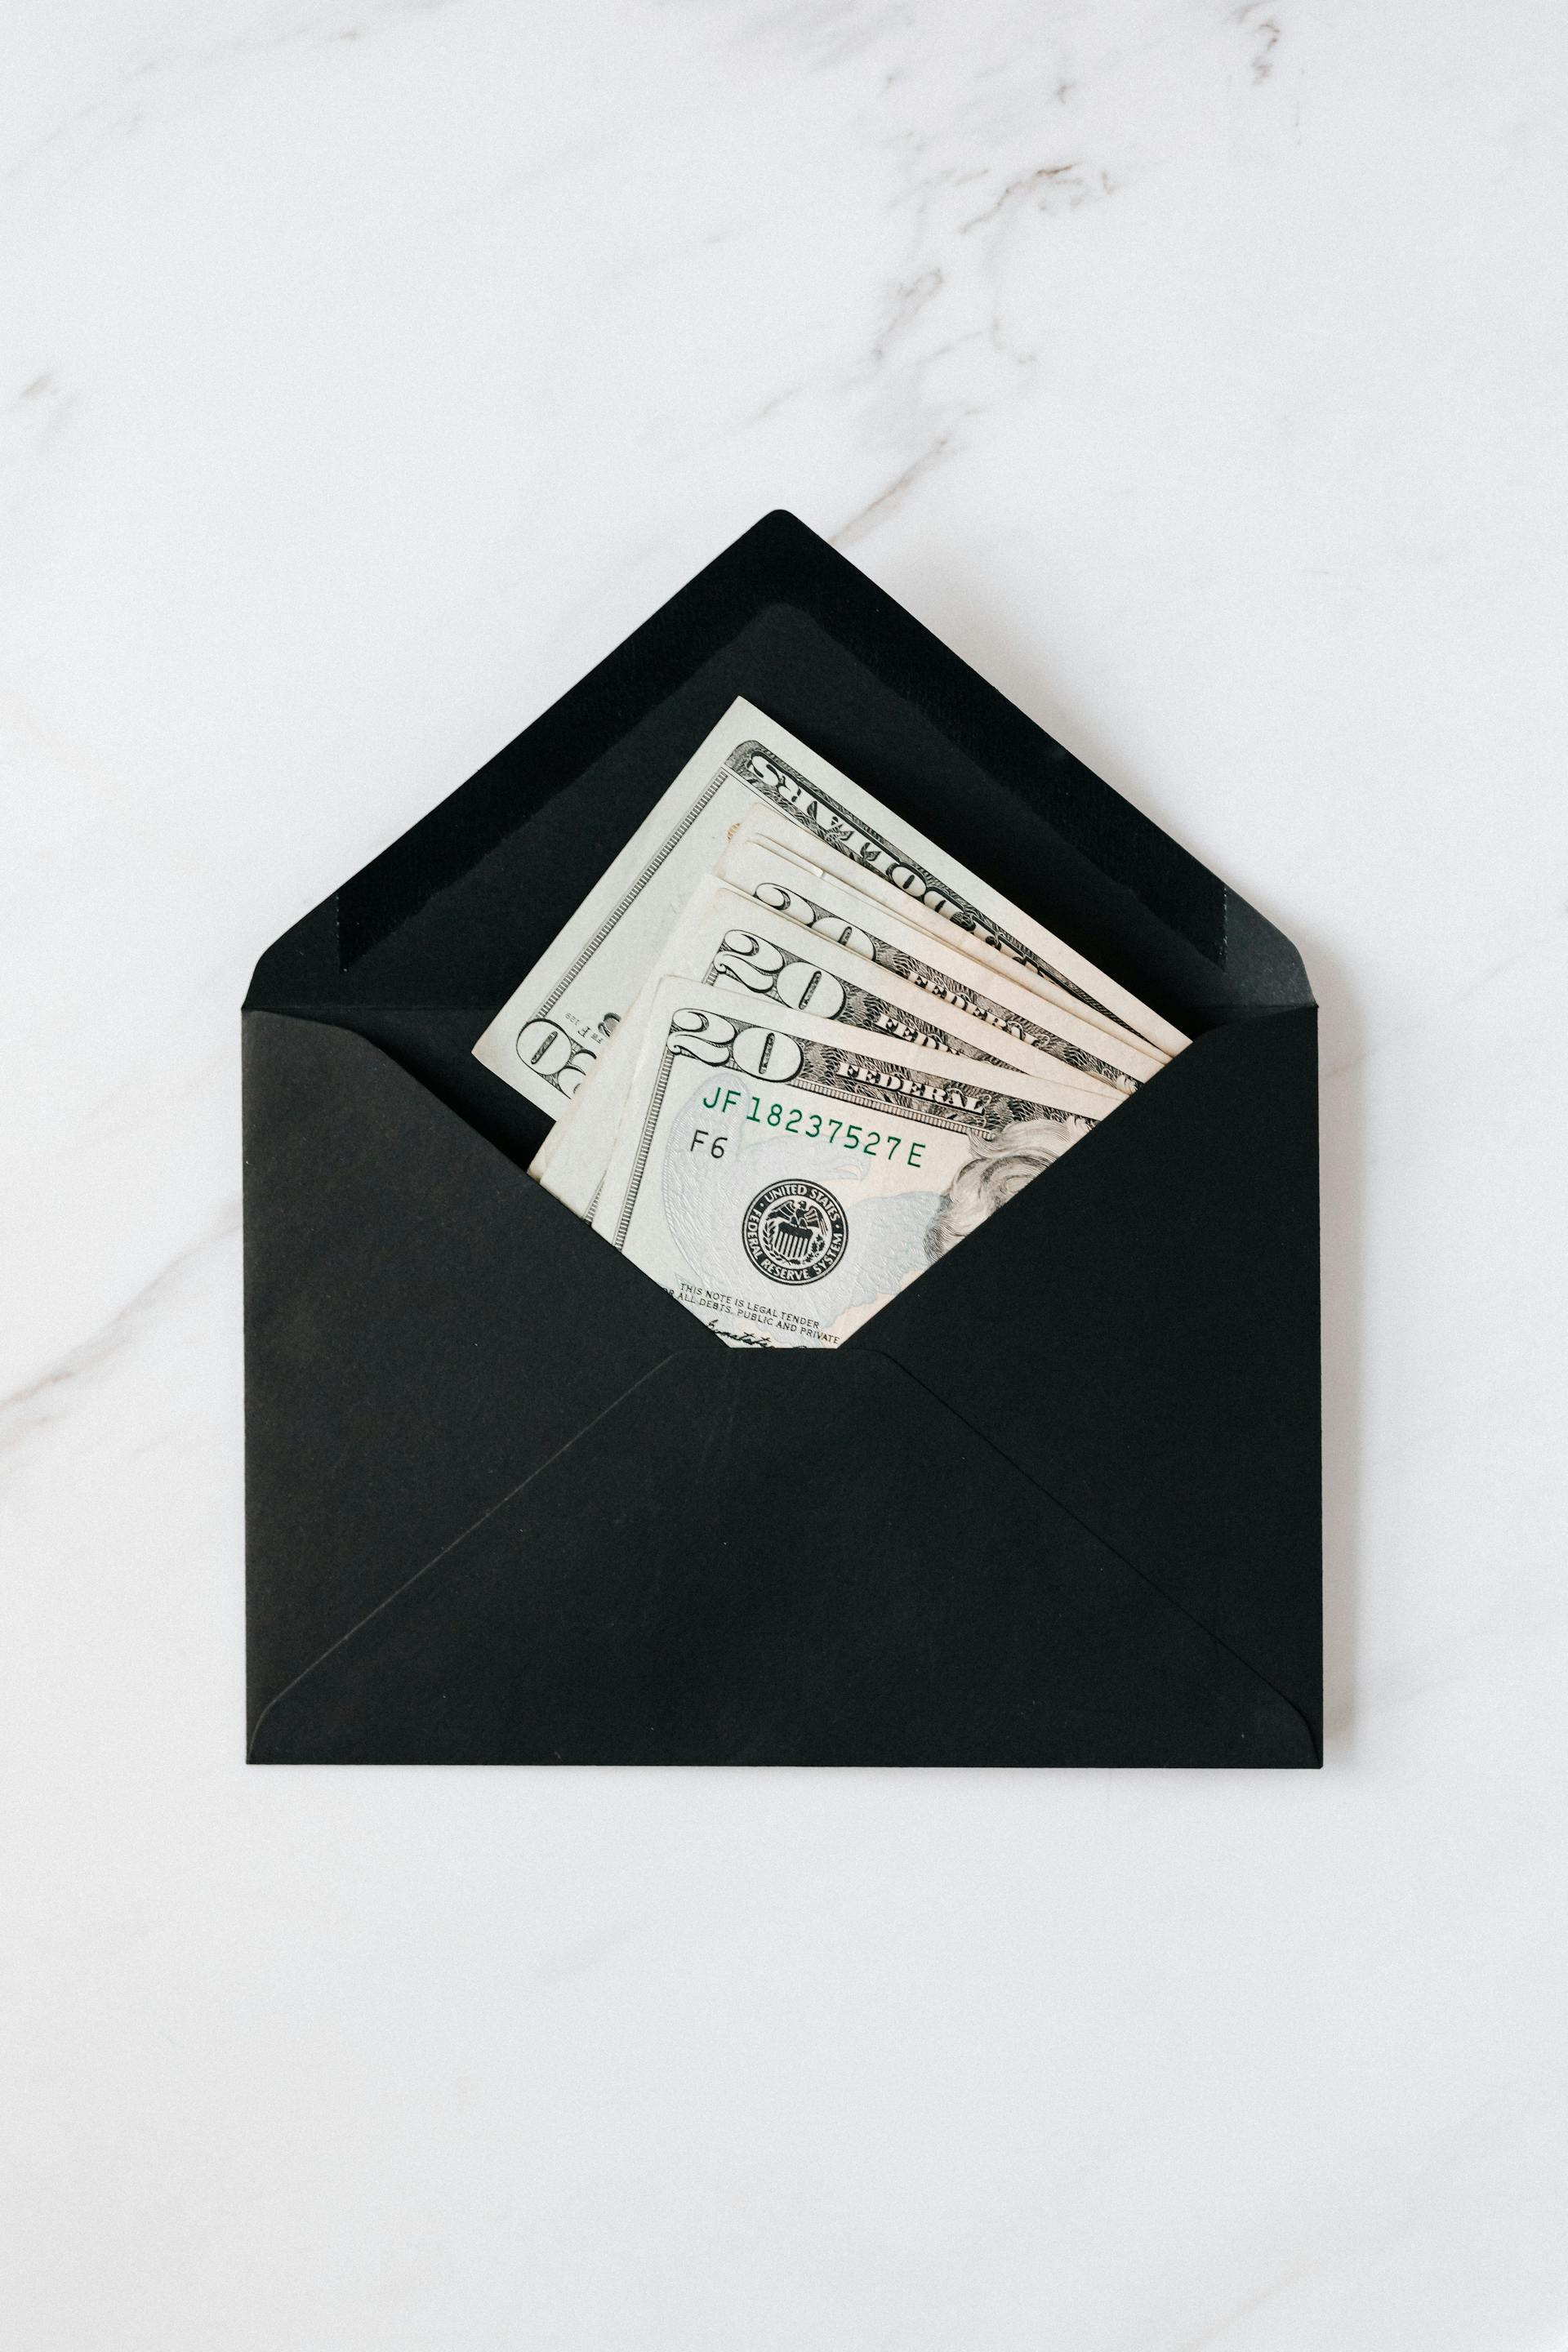 Money in an envelope | Source: Pexels